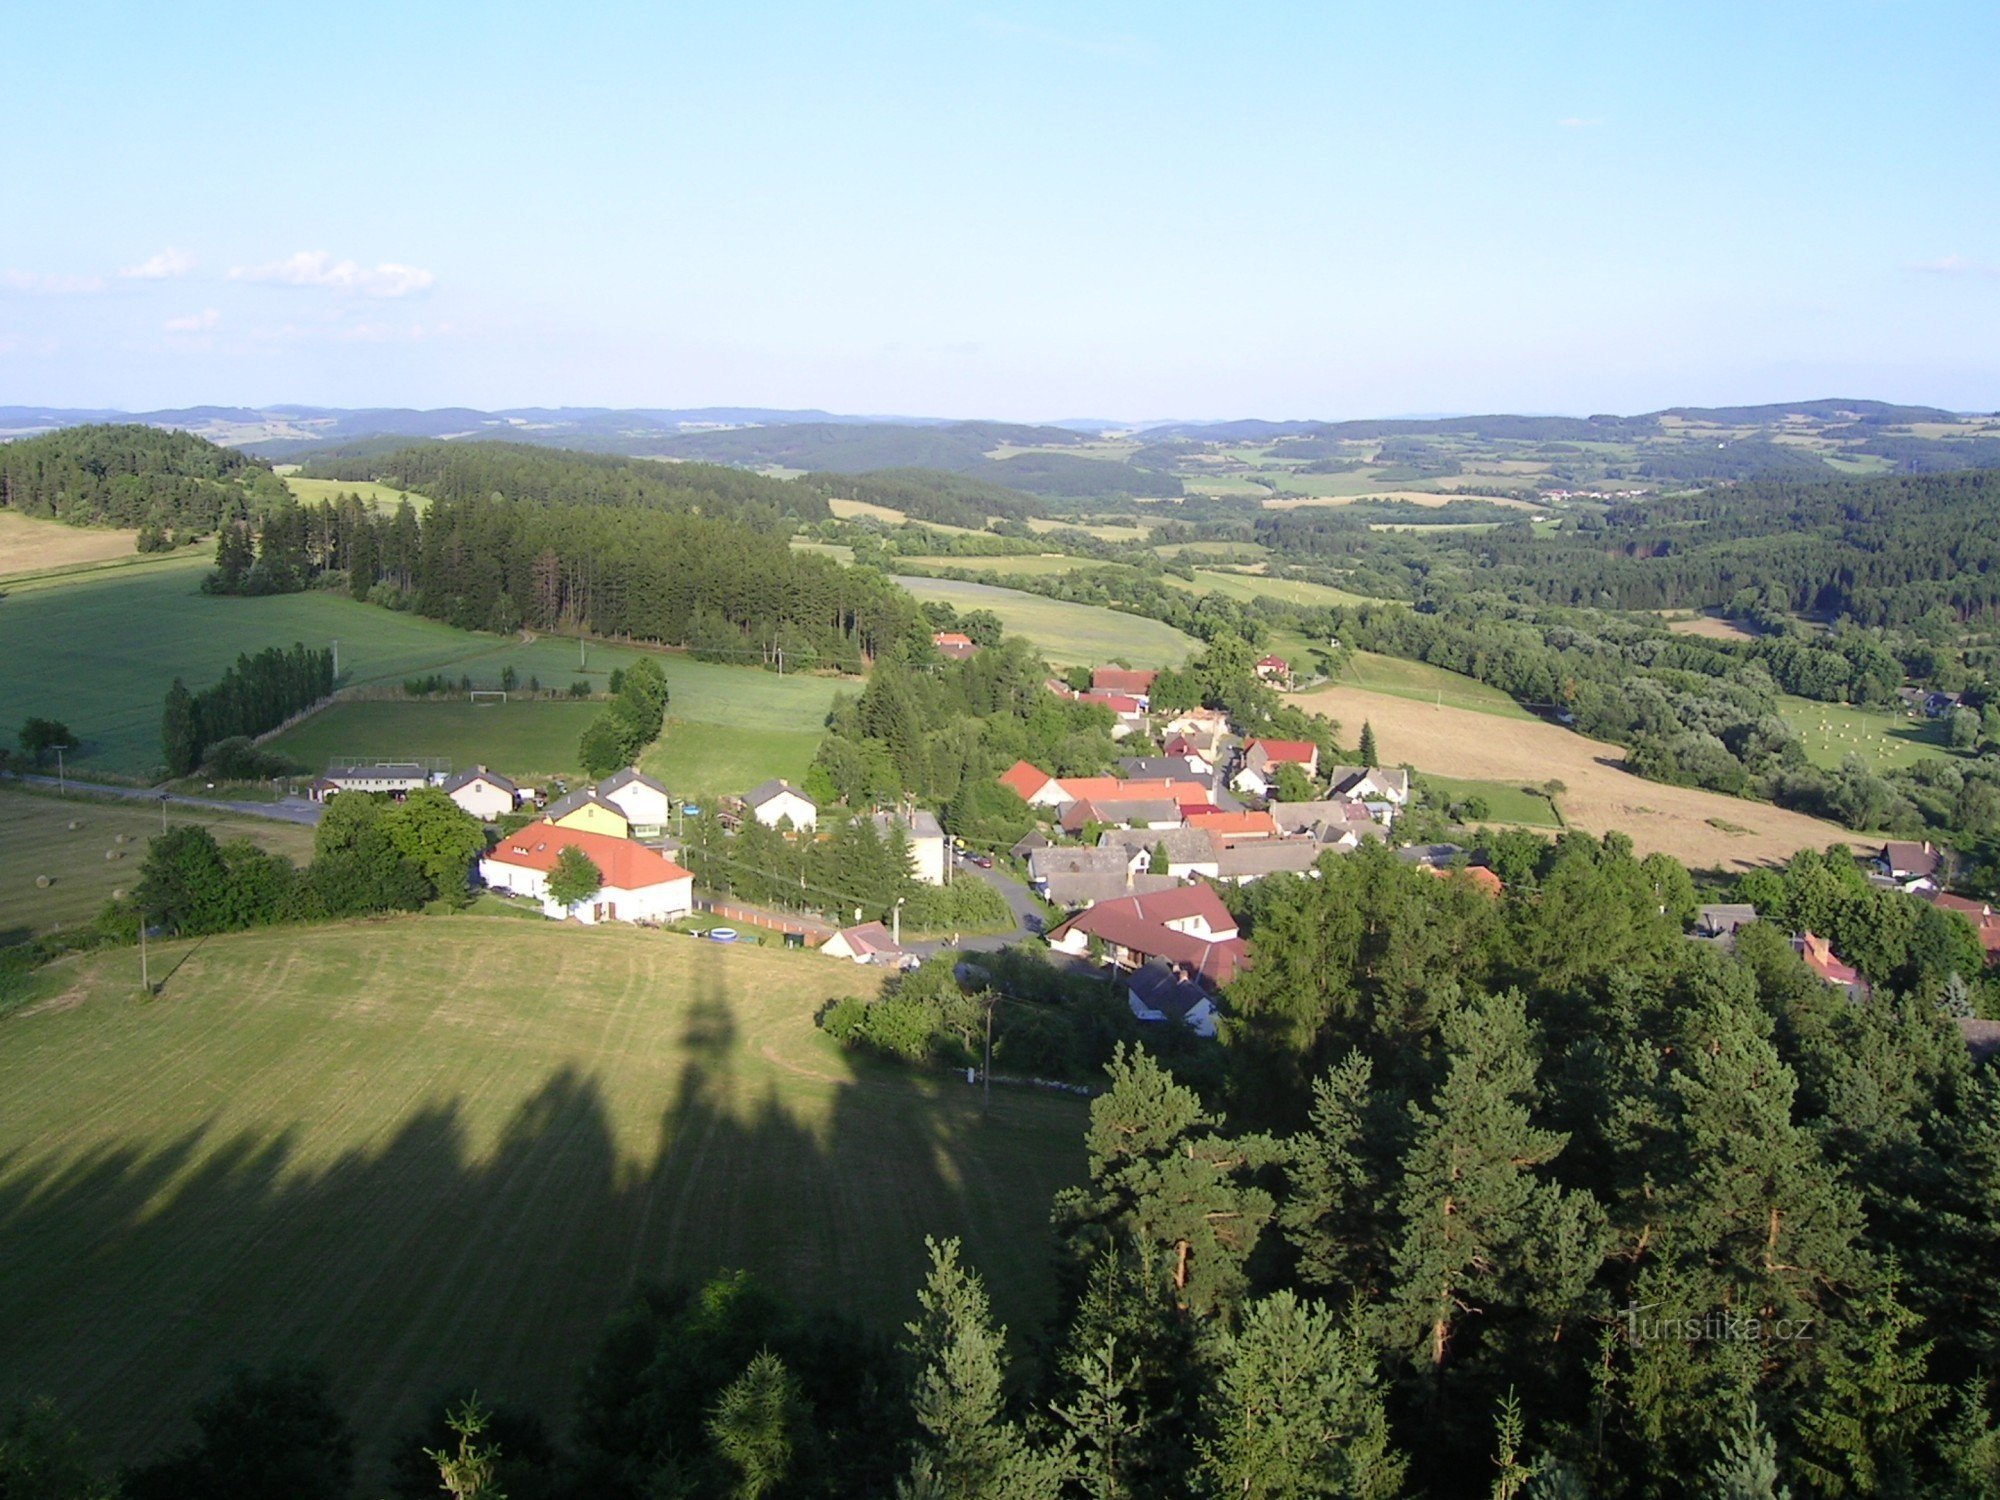 View to the SE - Hoslovice